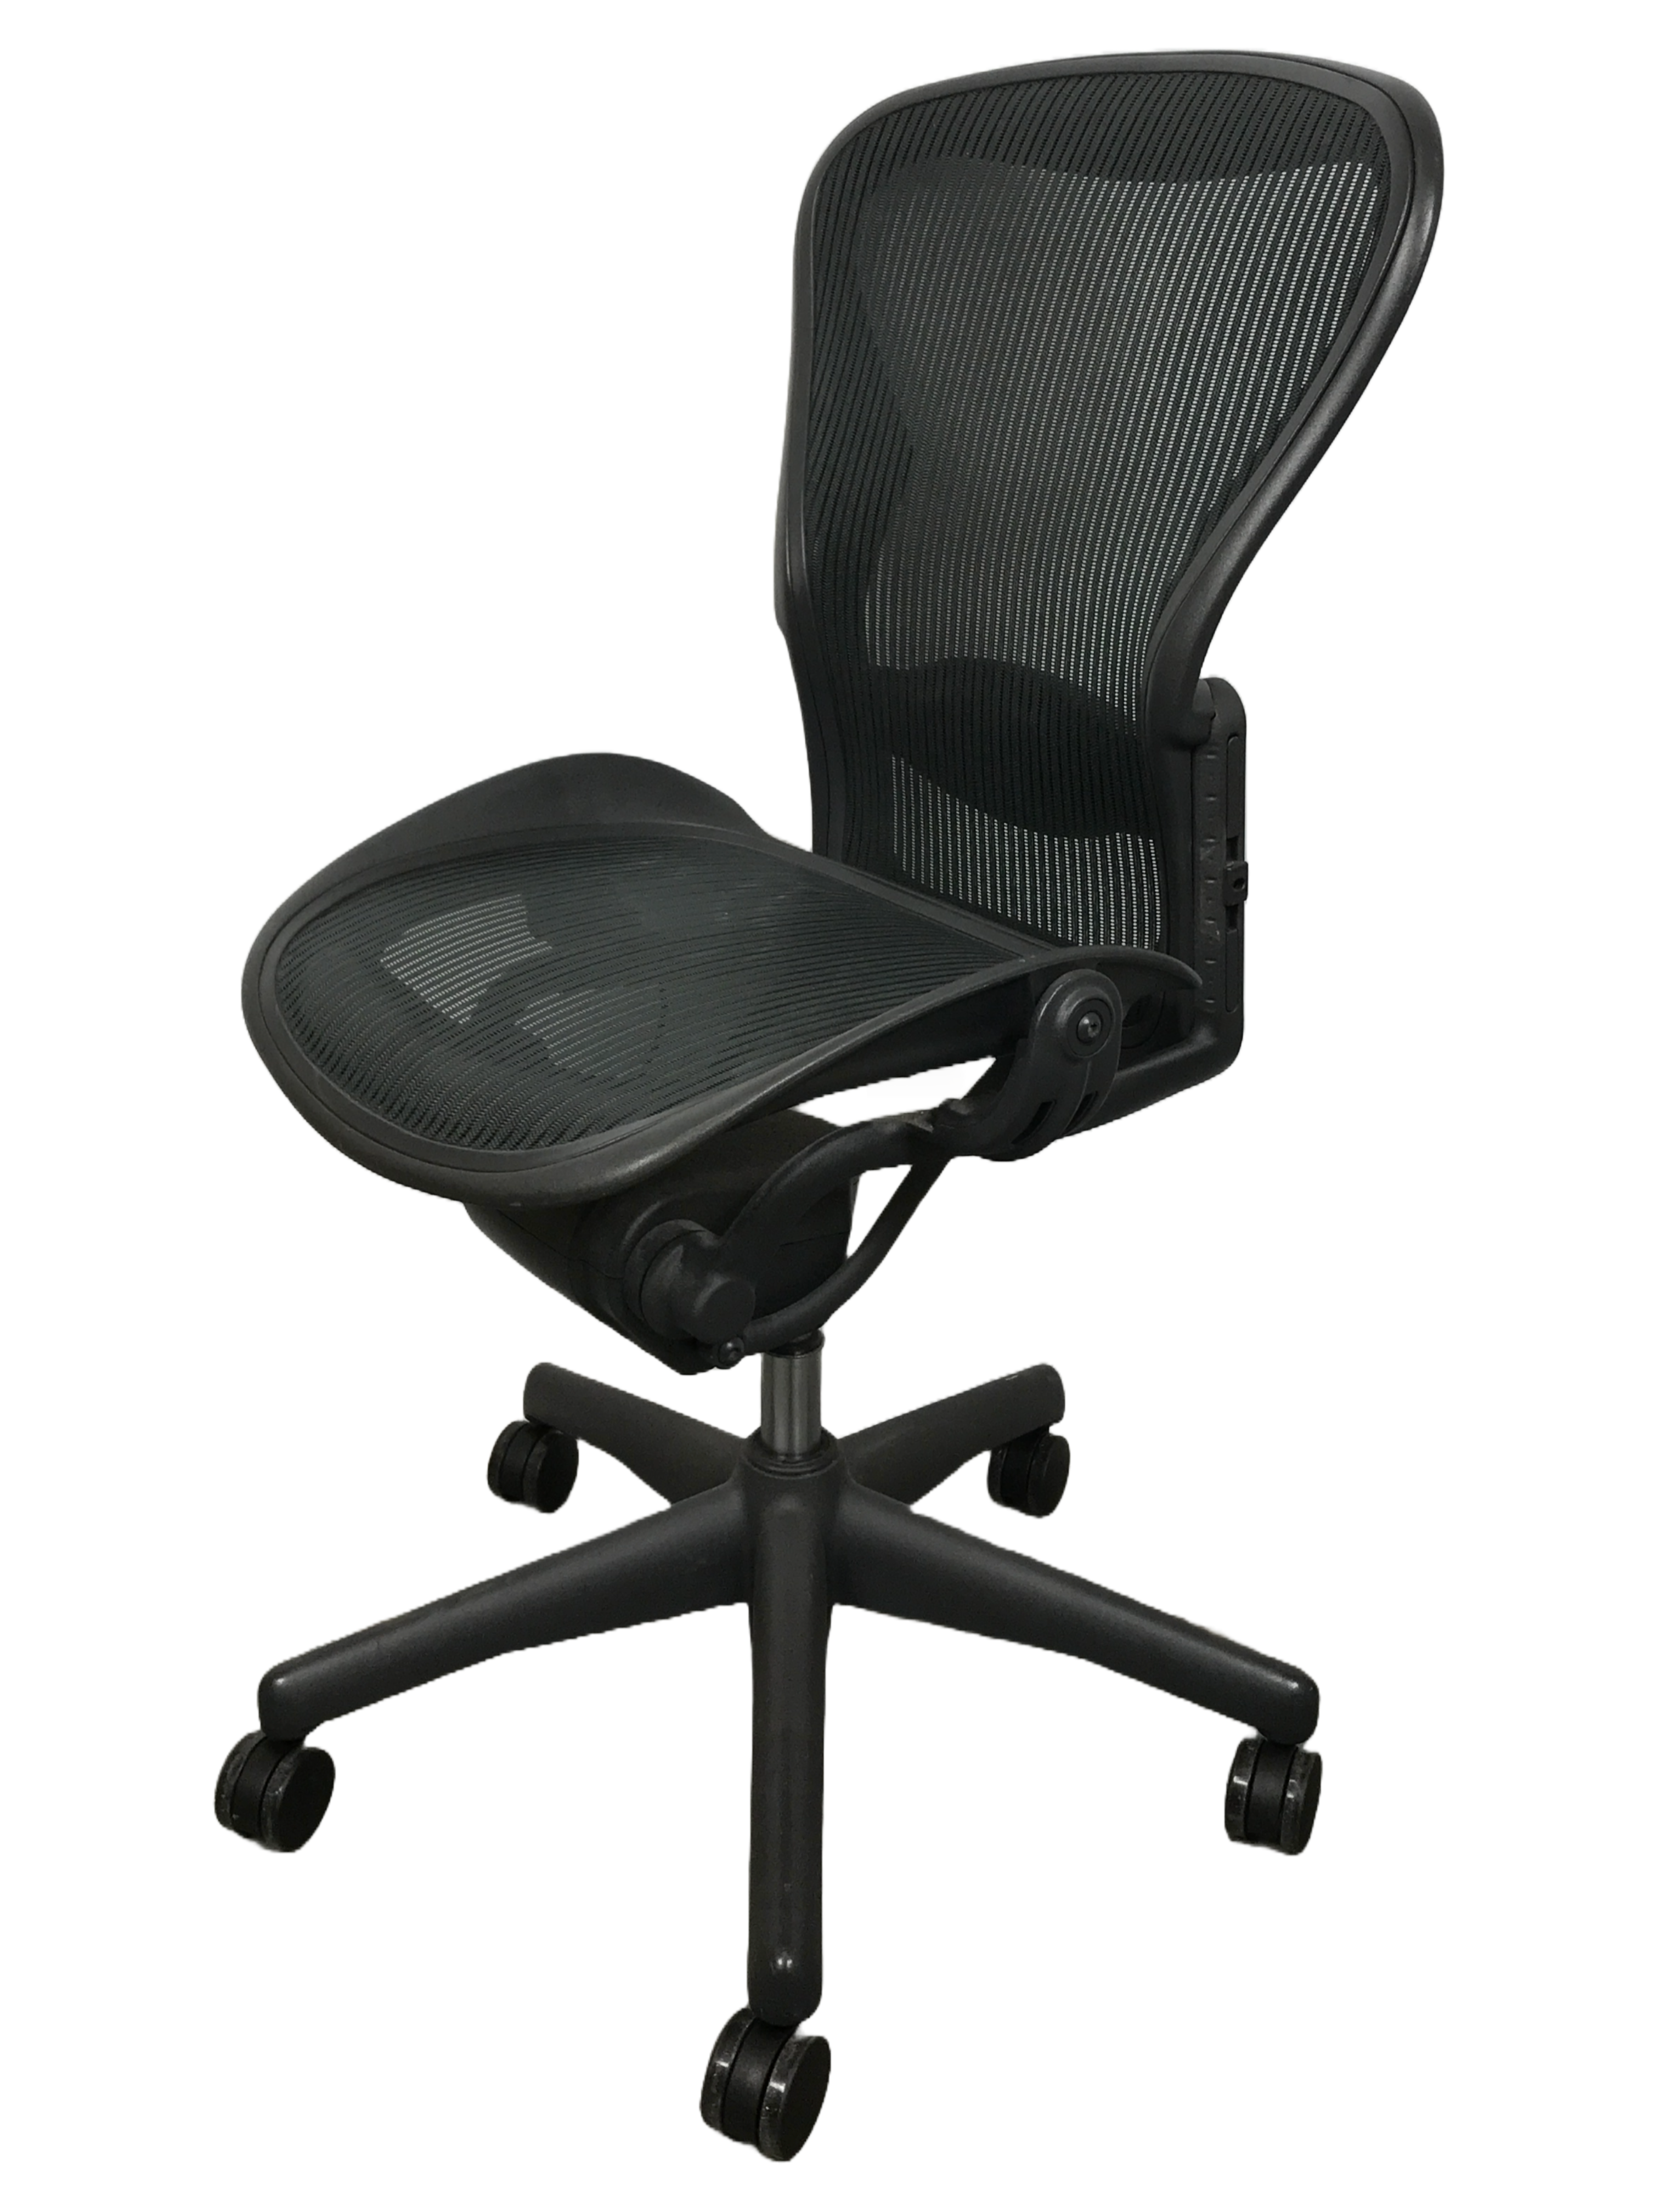 Green Herman Miller Aeron Chair Size B *No Arms*